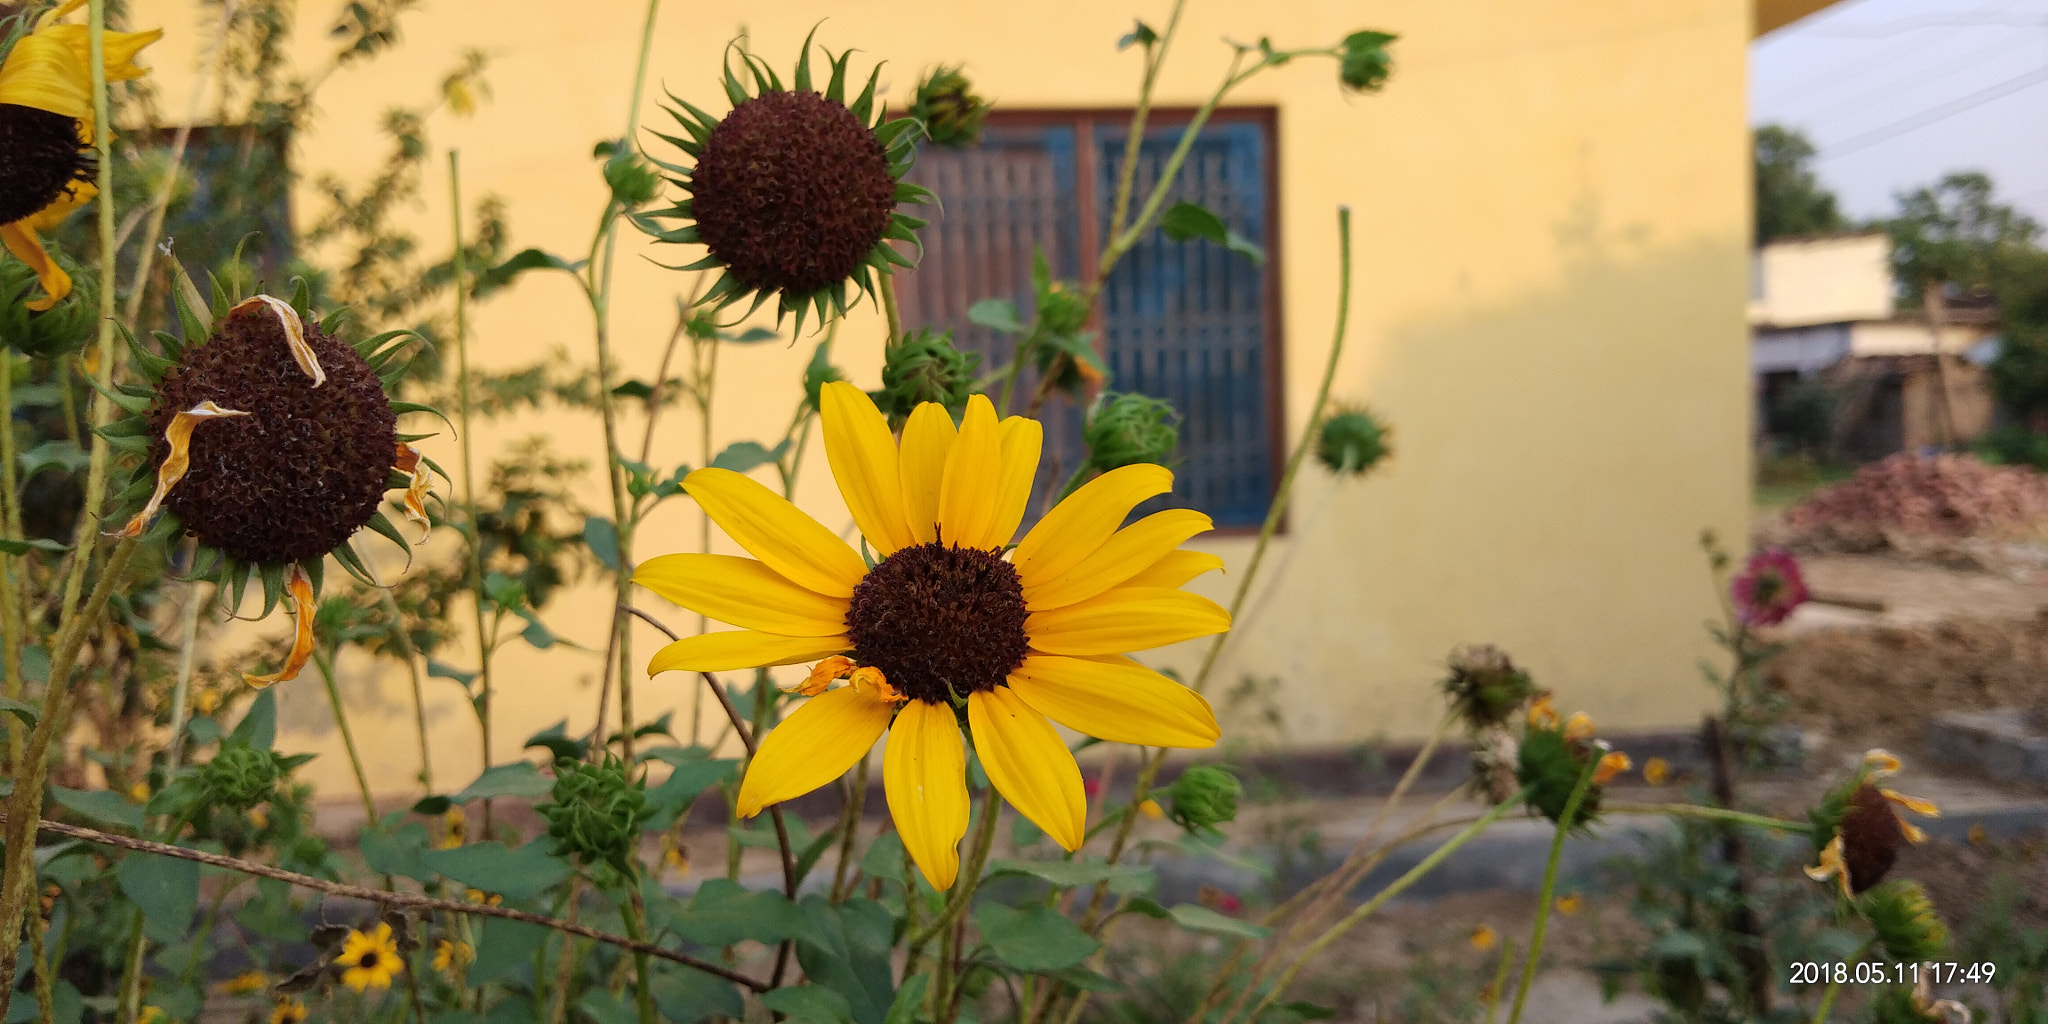 vivo 1718 sample photo. The sunflower photography